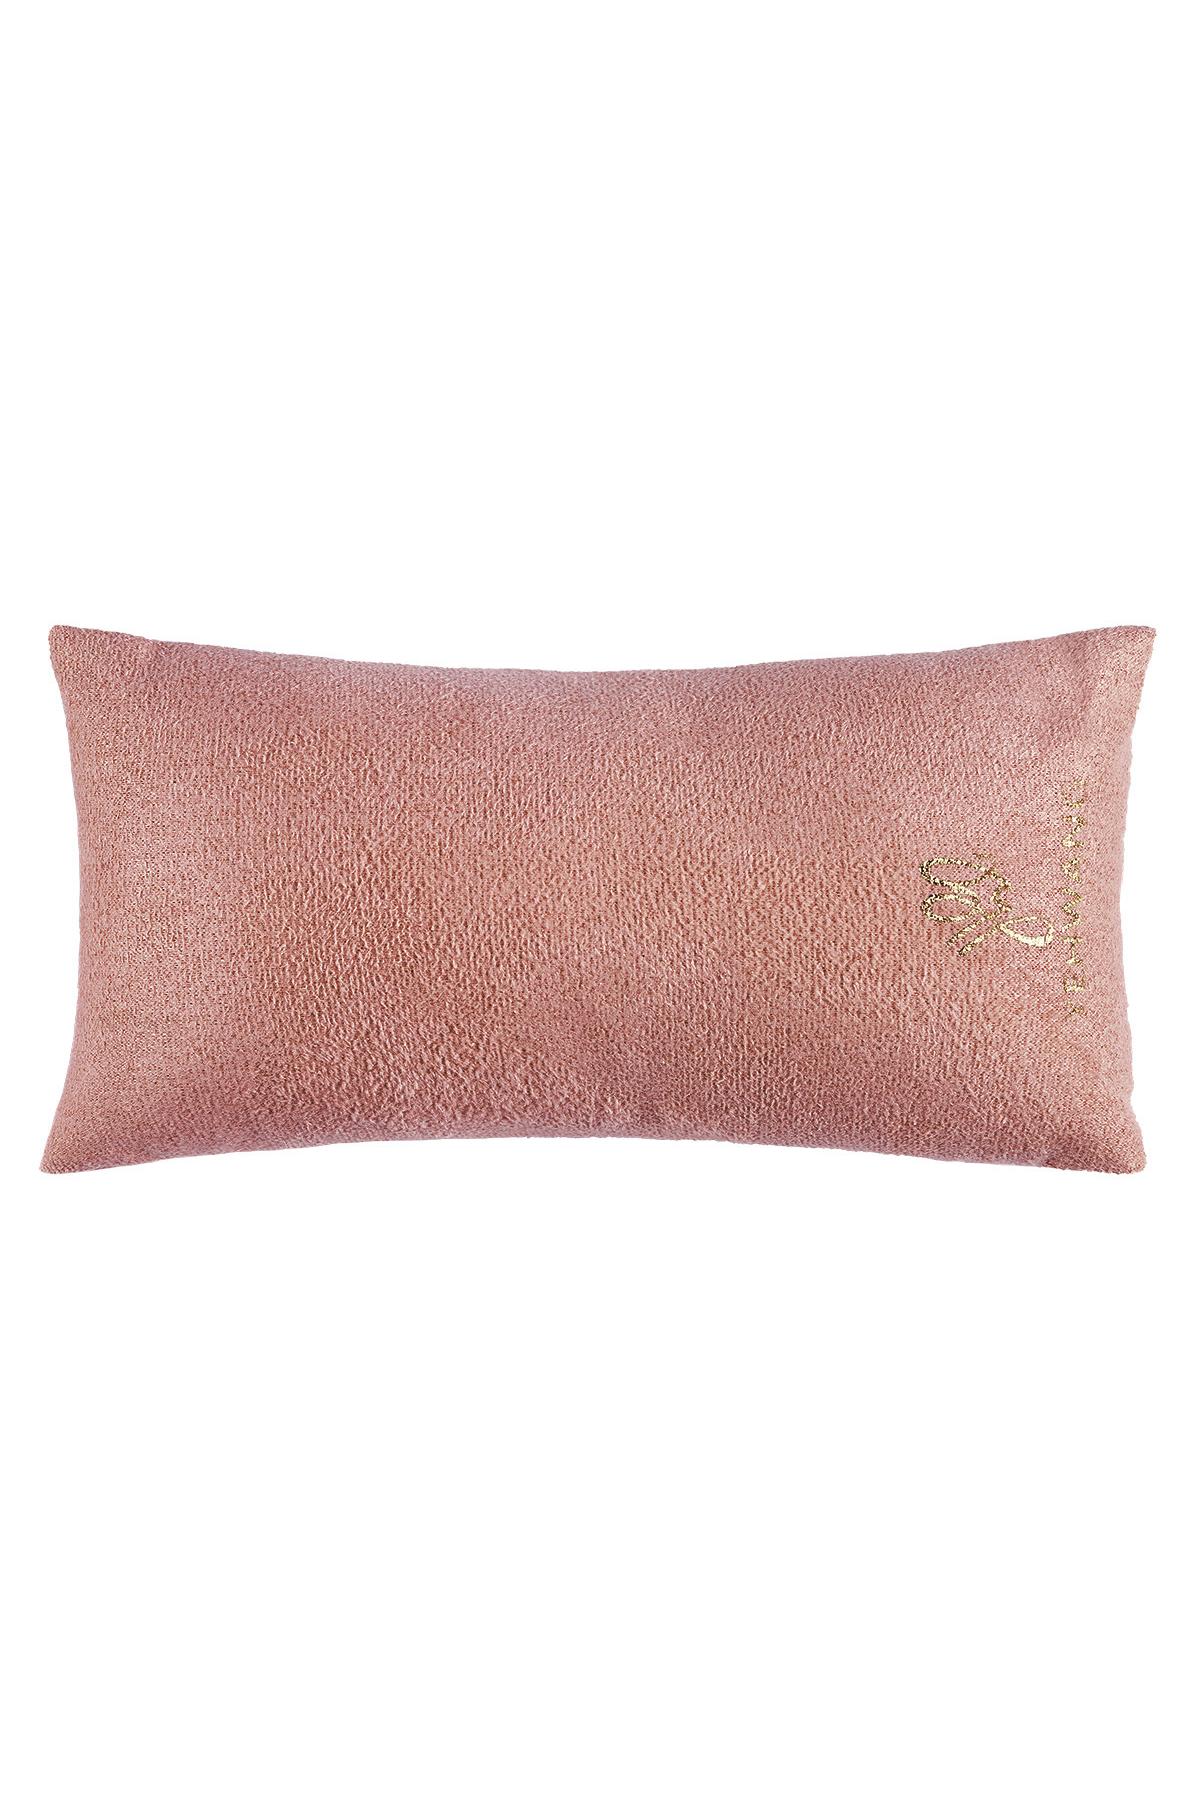 Bracelet cushion Pink Flannel